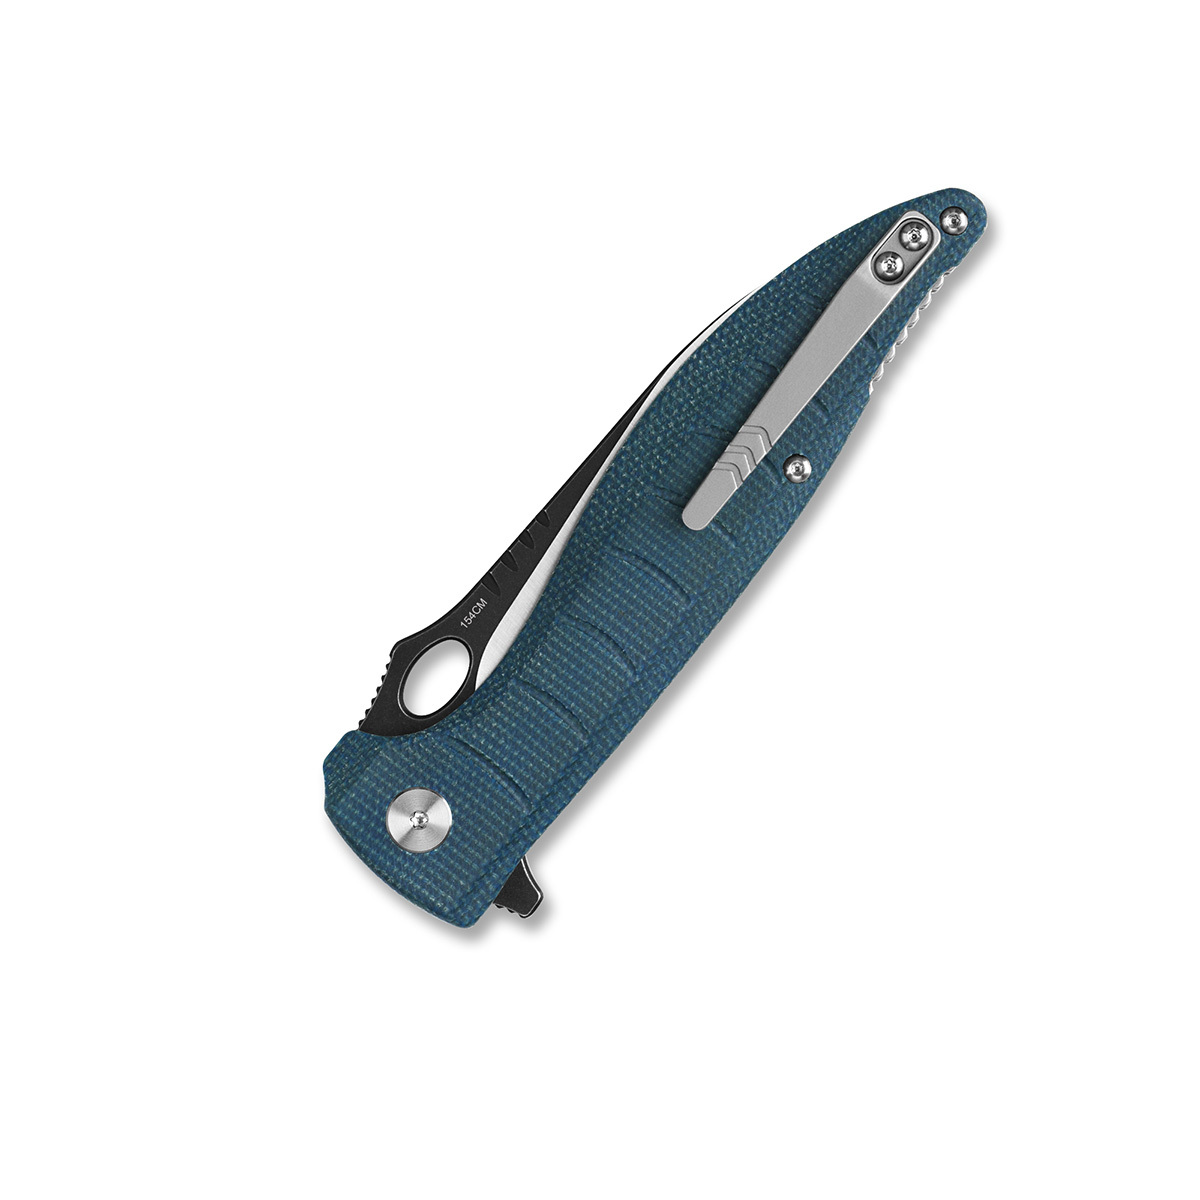 Складной нож Locust, сталь 154CM, рукоять микарта, синий - фото 4